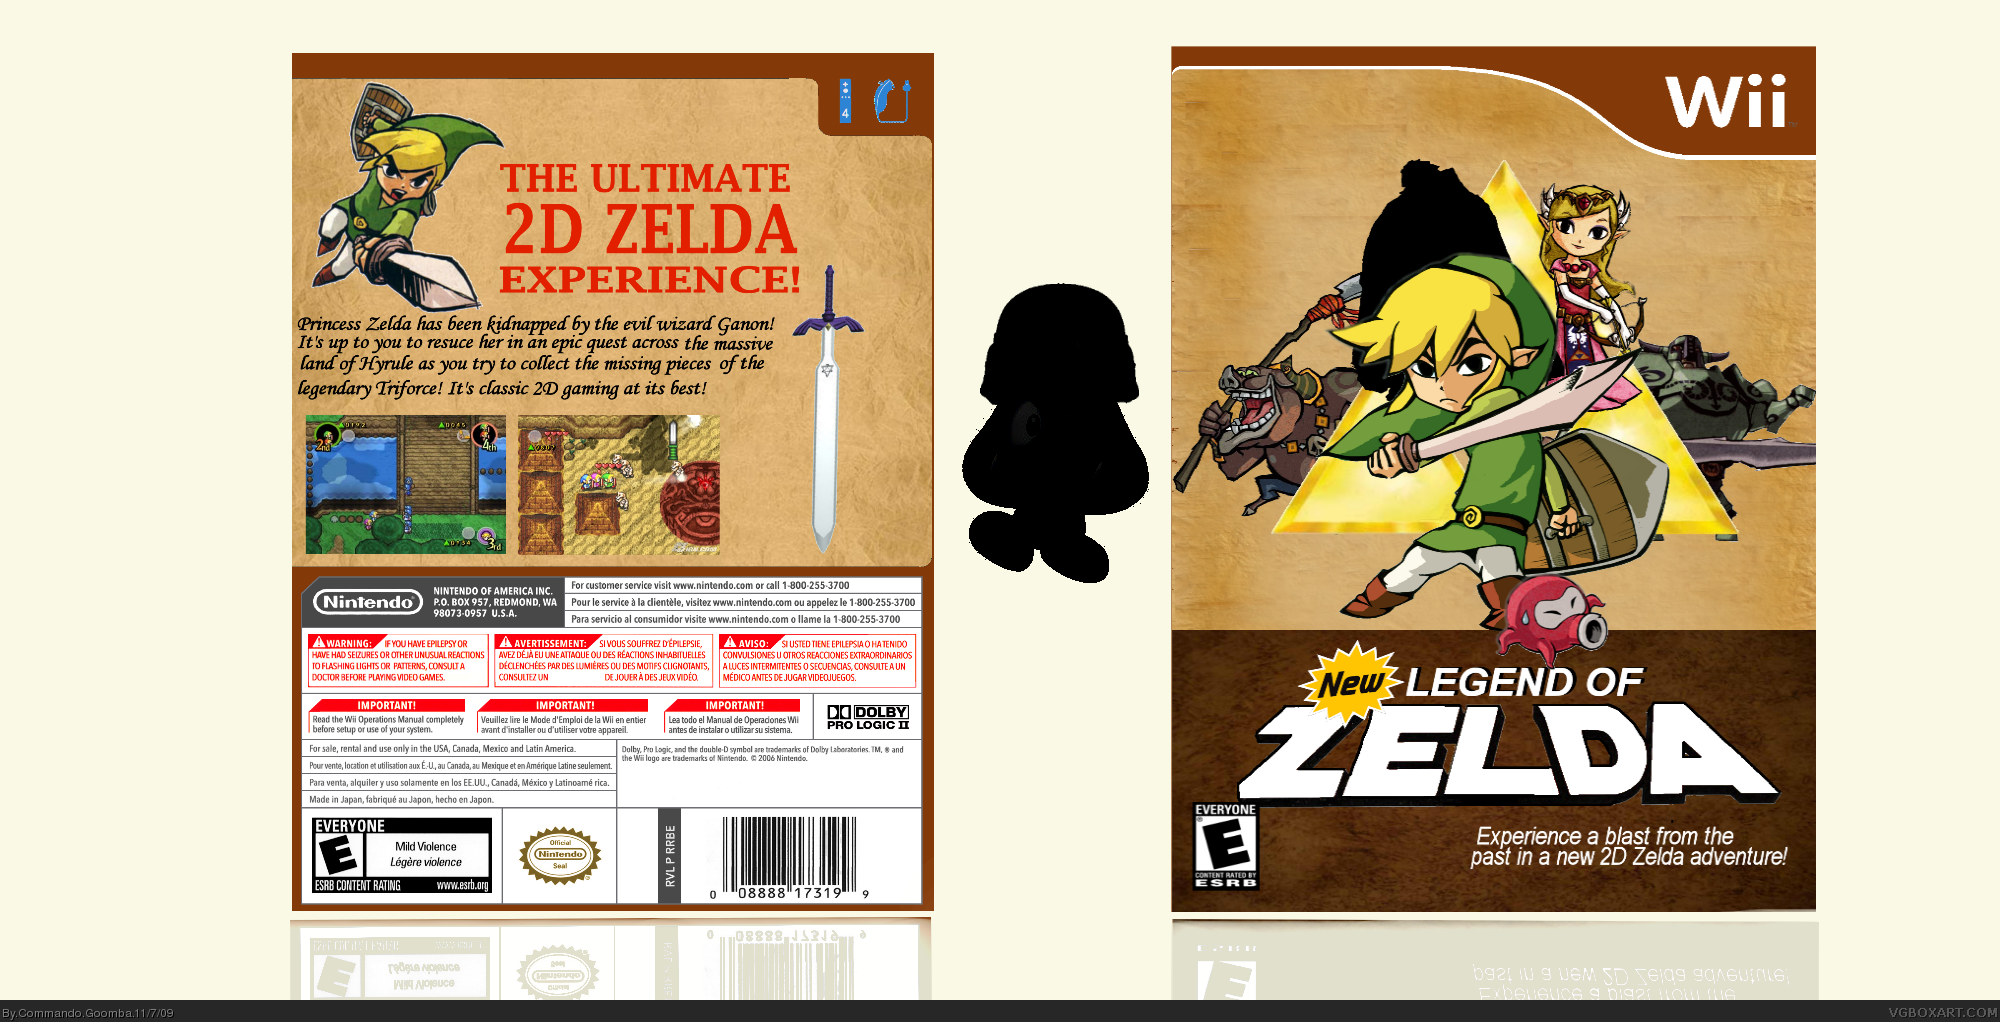 New Legend of Zelda box cover